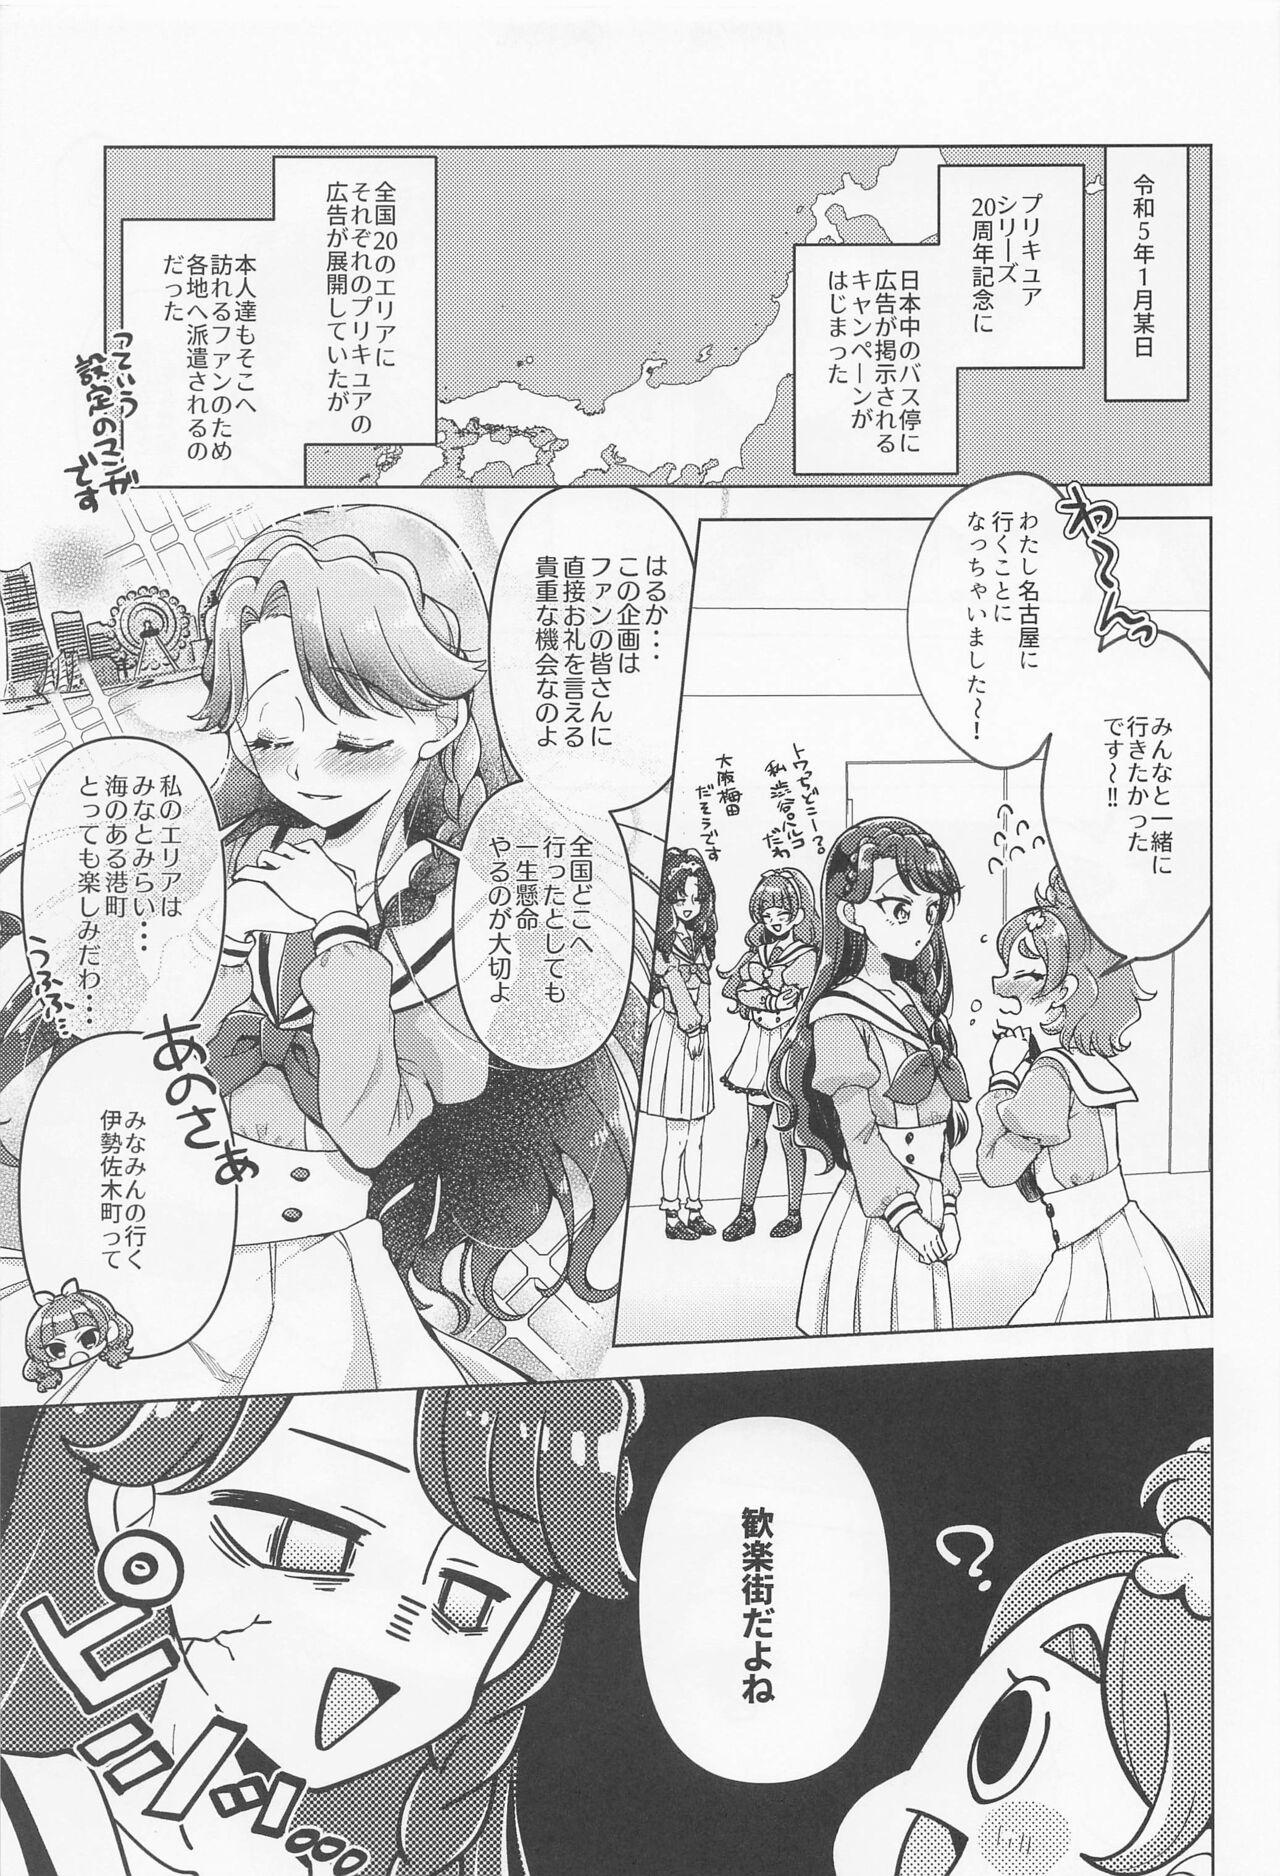 Off Kaidou Minami IN Isezaki - Go princess precure Yanks Featured - Page 6